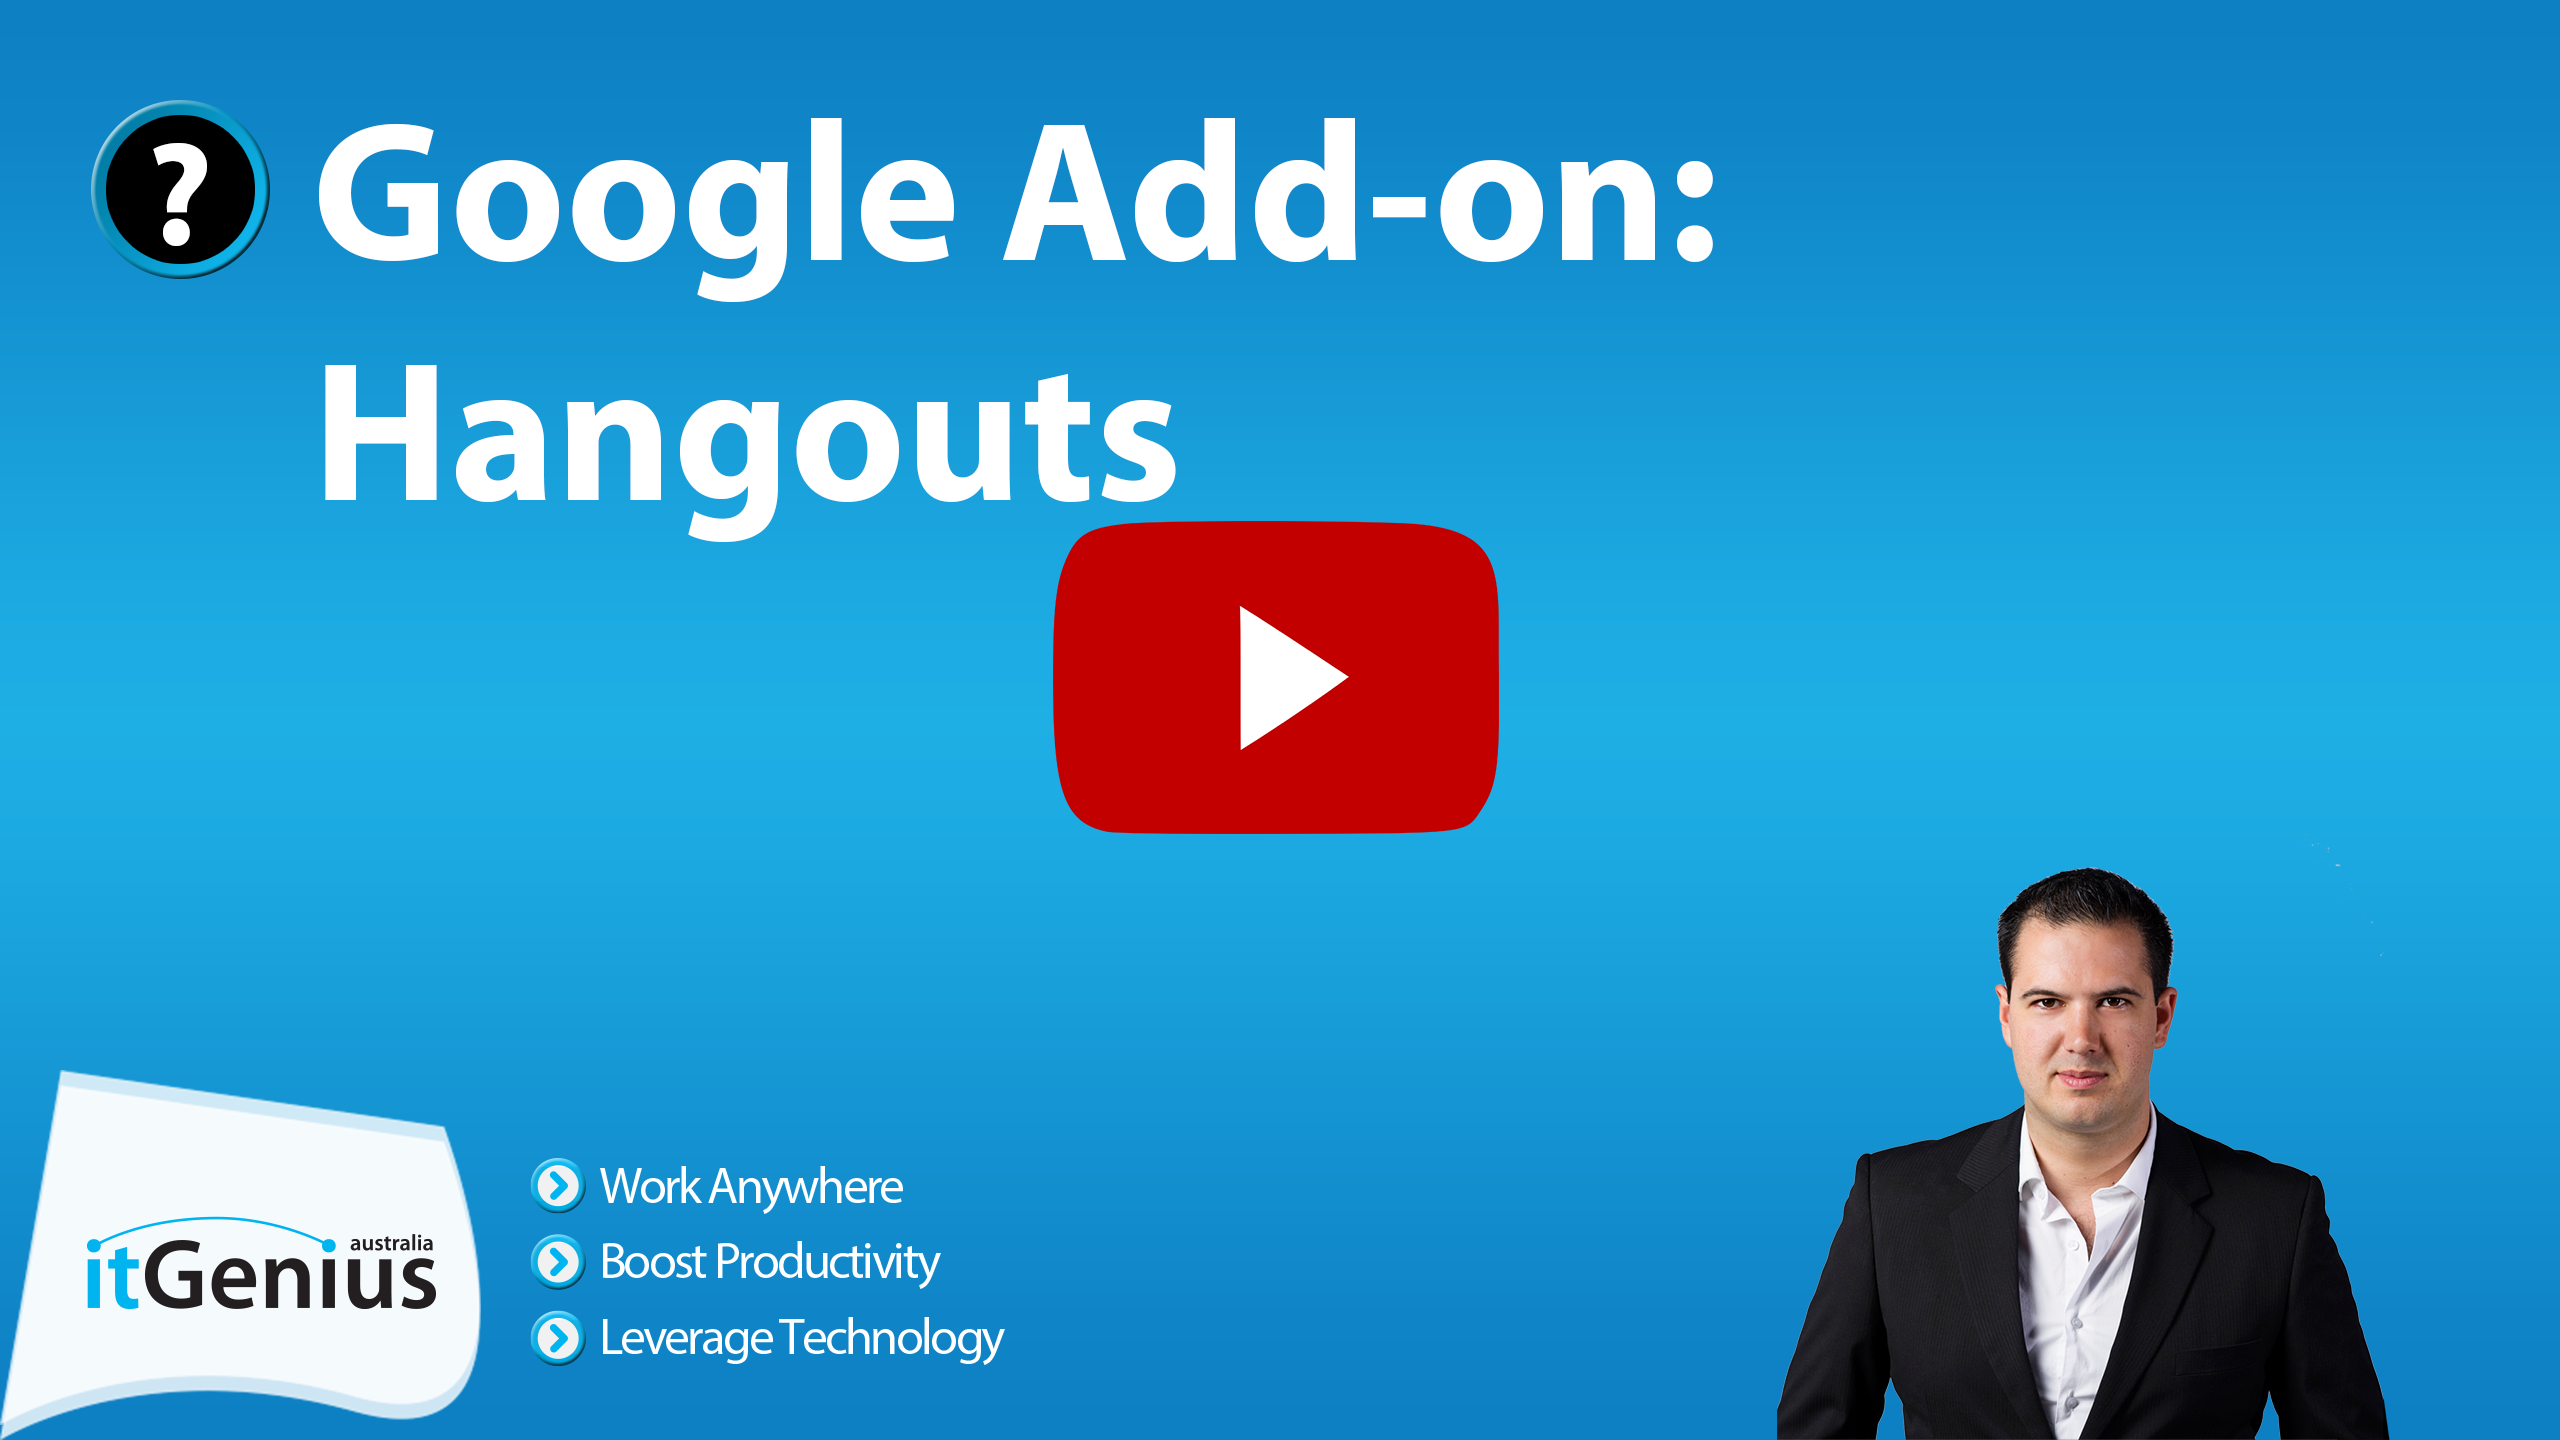 Google Add-on: Hangouts